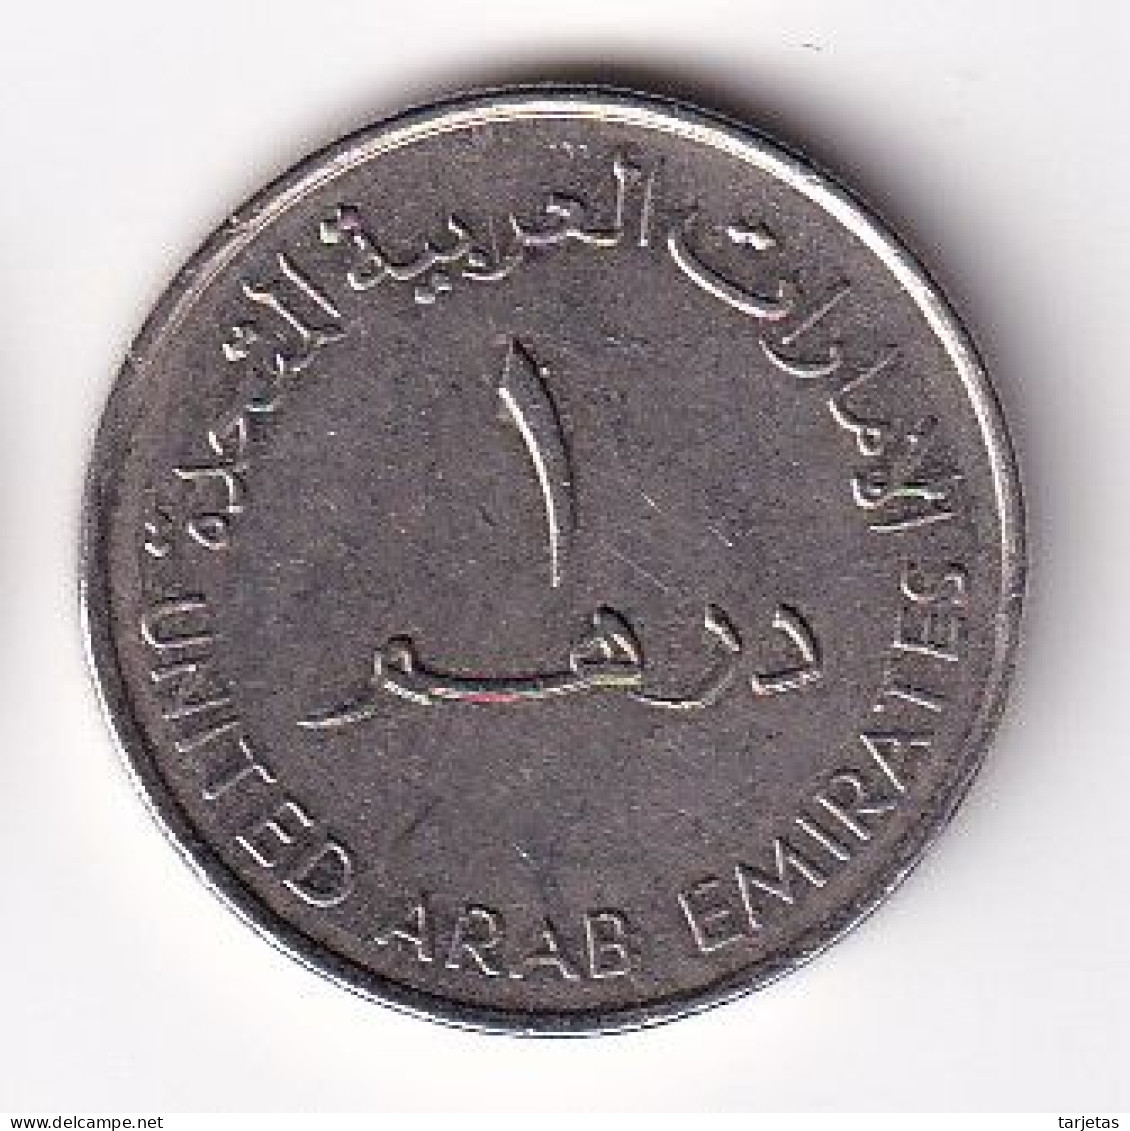 MONEDA DE EMIRATOS ARABES DE 1 DIRHAM DEL AÑO 2007 - SHARJAH INTERNATIONAL AIRPORT (COIN) - Ver. Arab. Emirate